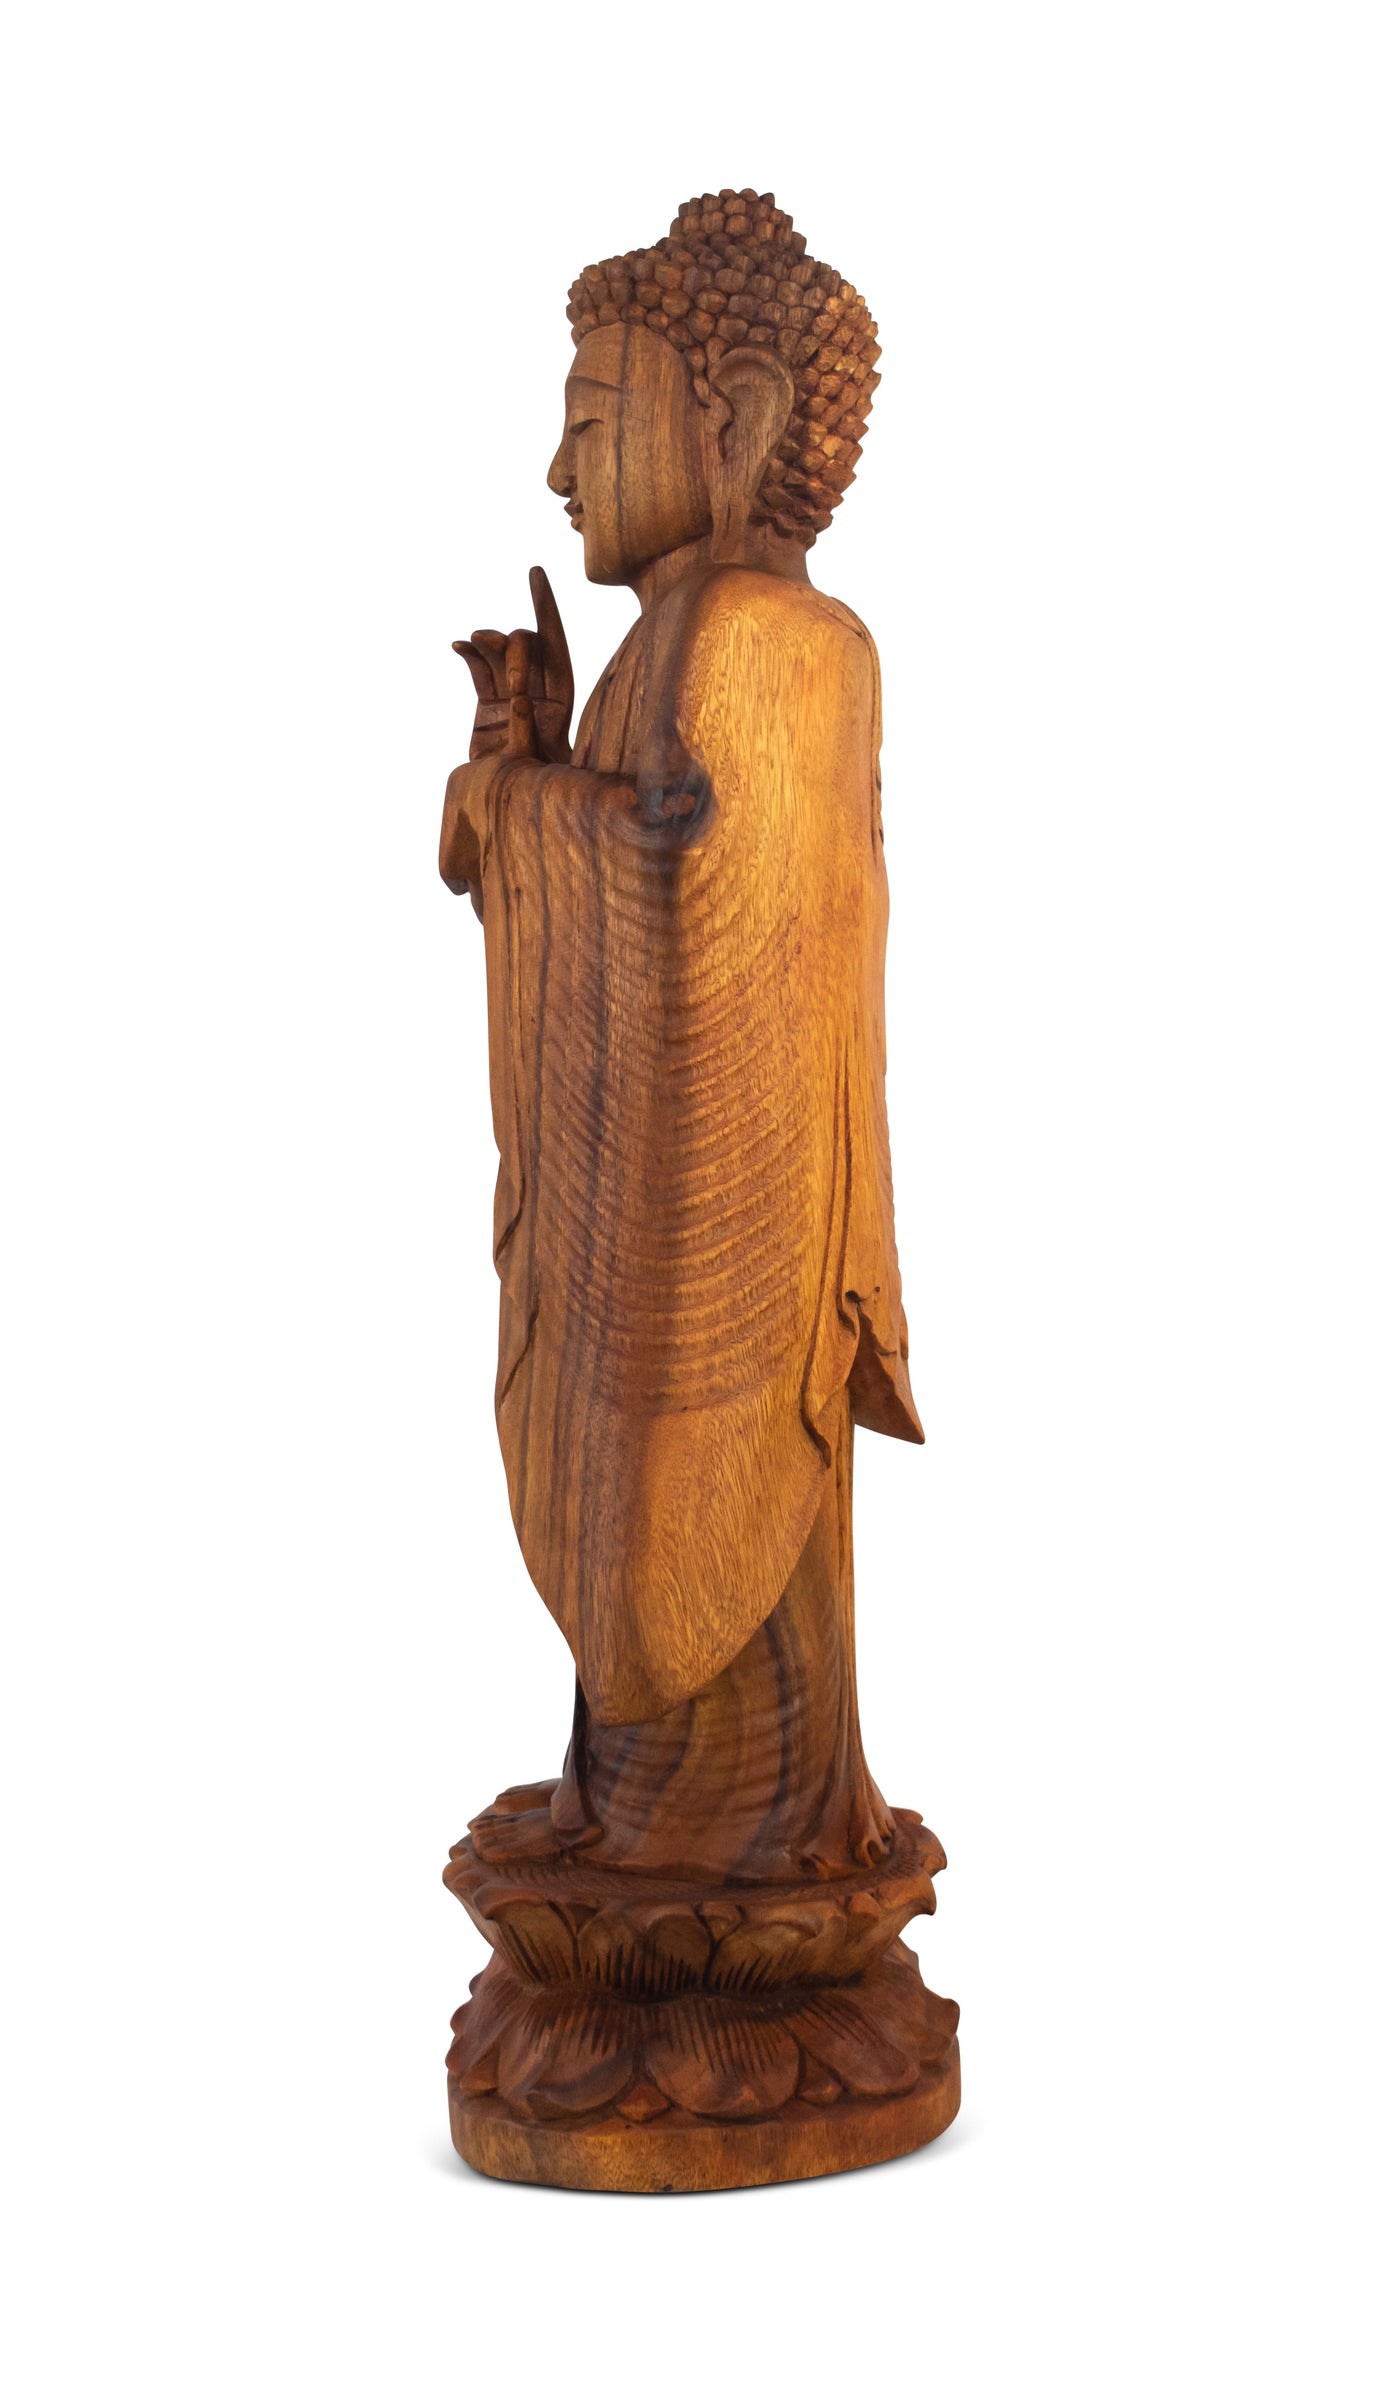 24" Wooden Hand Carved Serene Standing Buddha Statue Handmade Meditating Sculpture Figurine Home Decor Accent Handcrafted Gift Art Wood Oriental